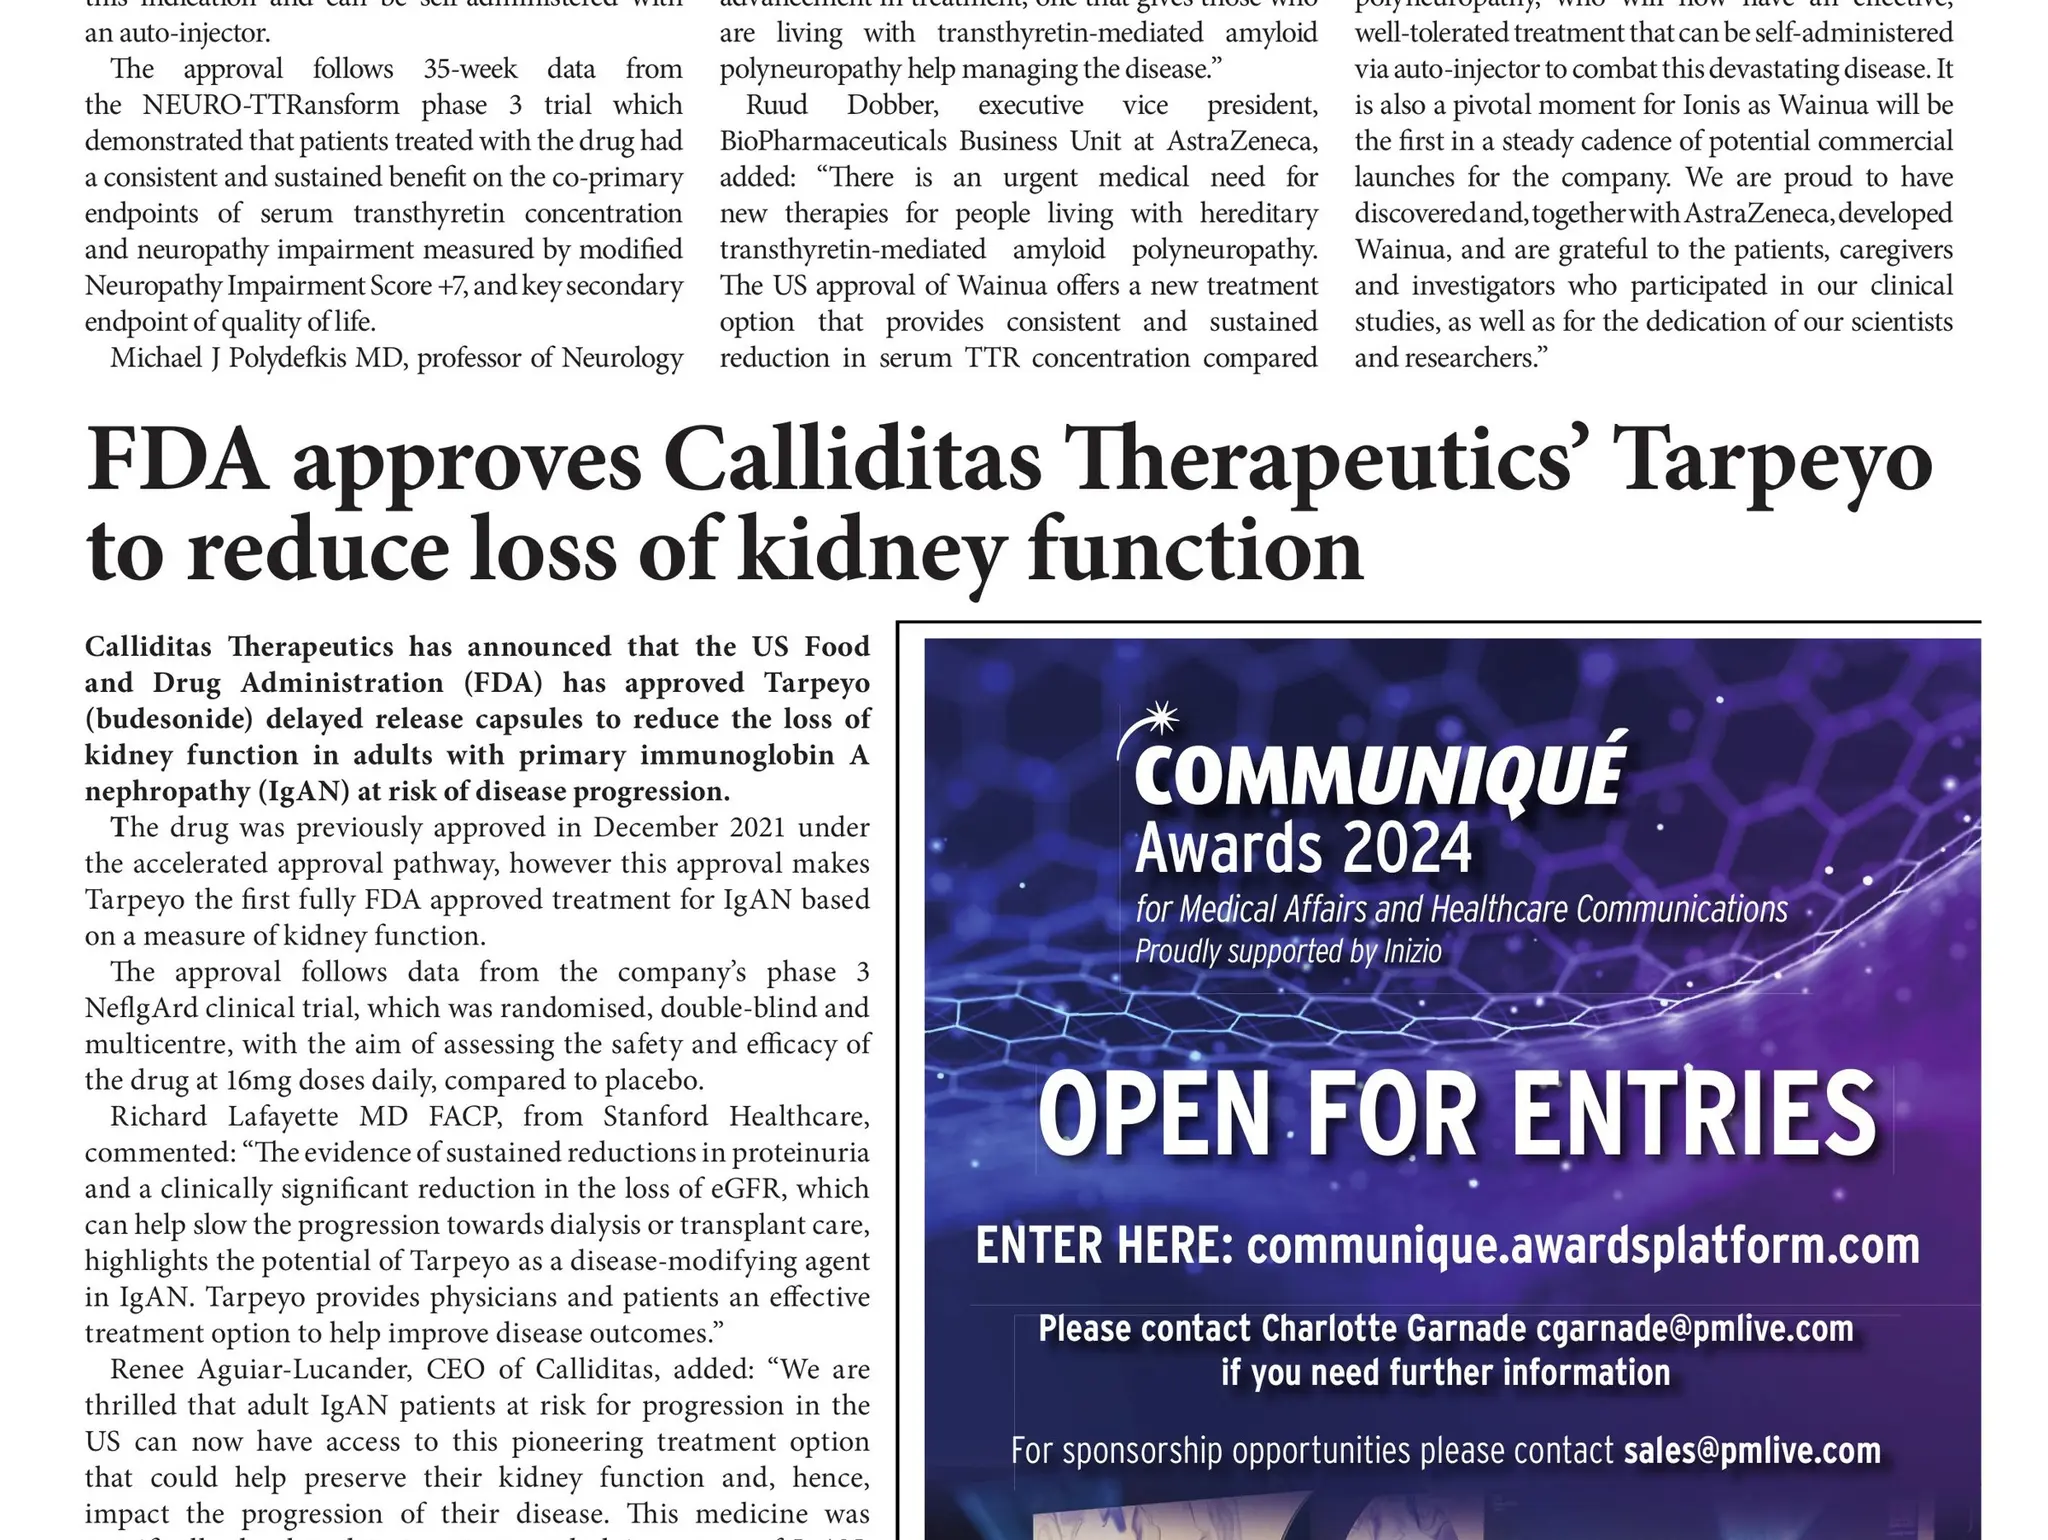 FDA approves Calliditas Therapeutics’ Tarpeyo to reduce loss of kidney function